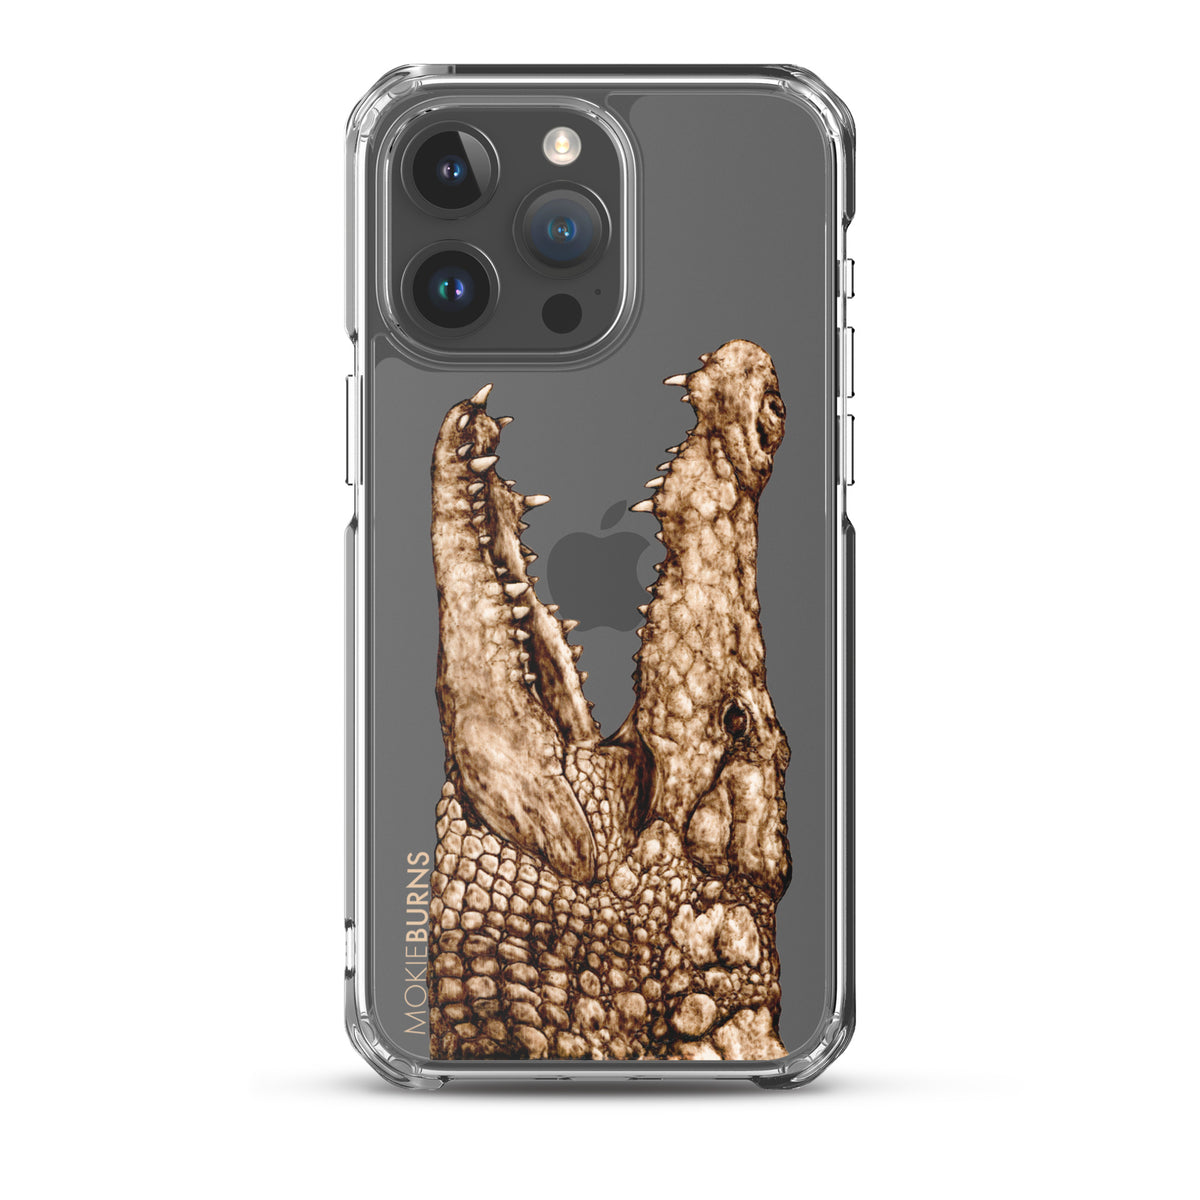 Florida Gator - iPhone Case [all sizes] - FREE SHIPPING